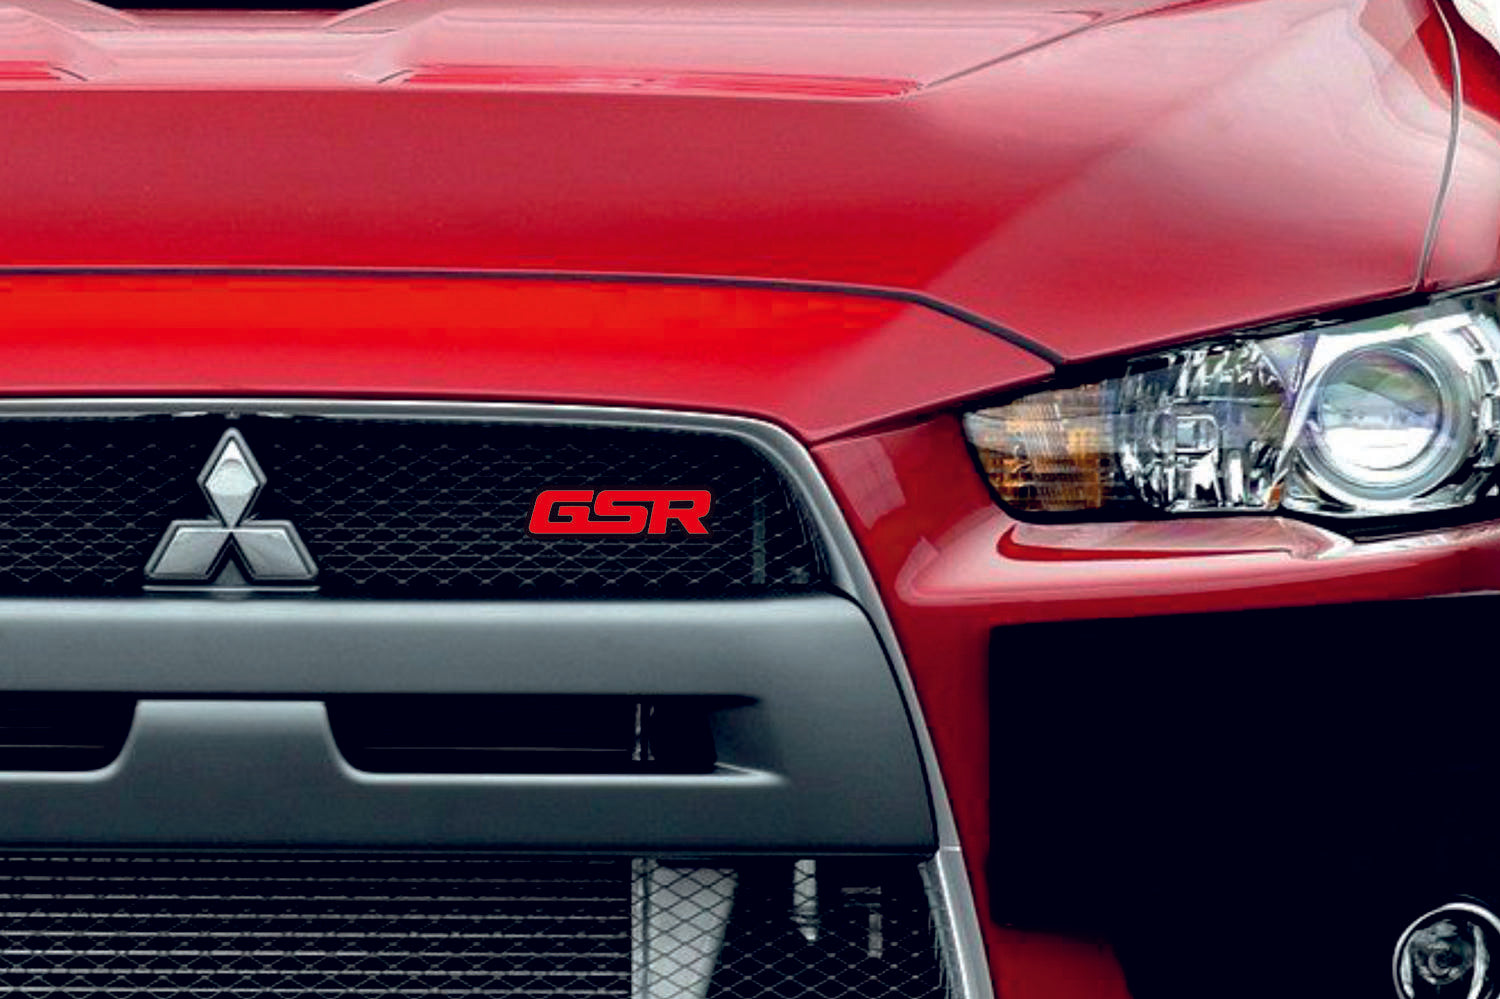 Mitsubishi Radiator grille emblem with GSR logo